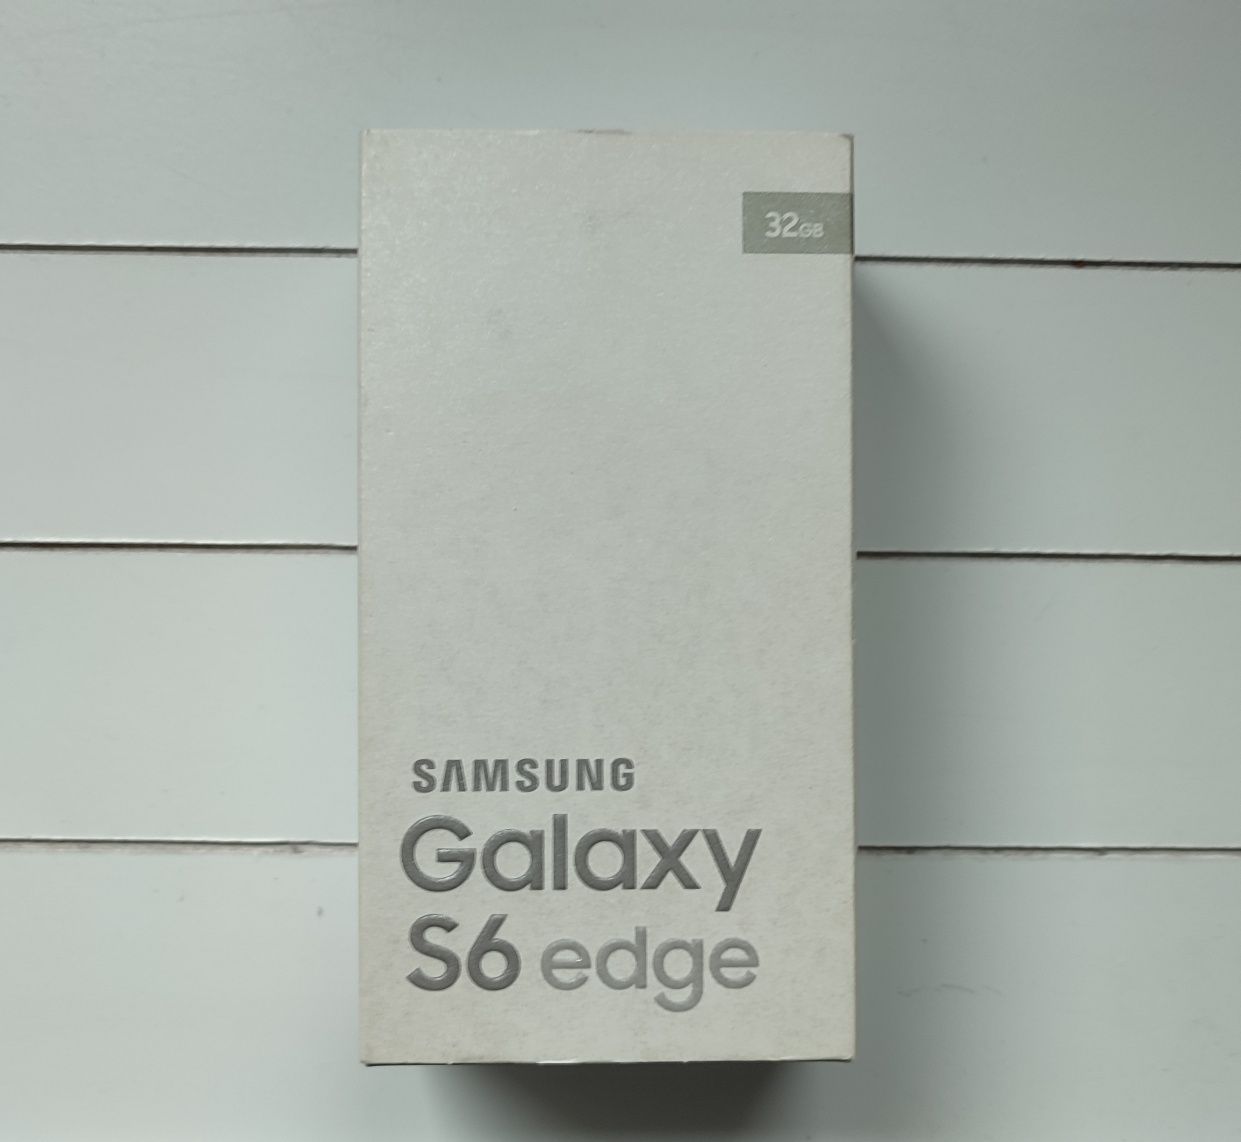 Samsung Galaxy S6 edge Gold Platinum